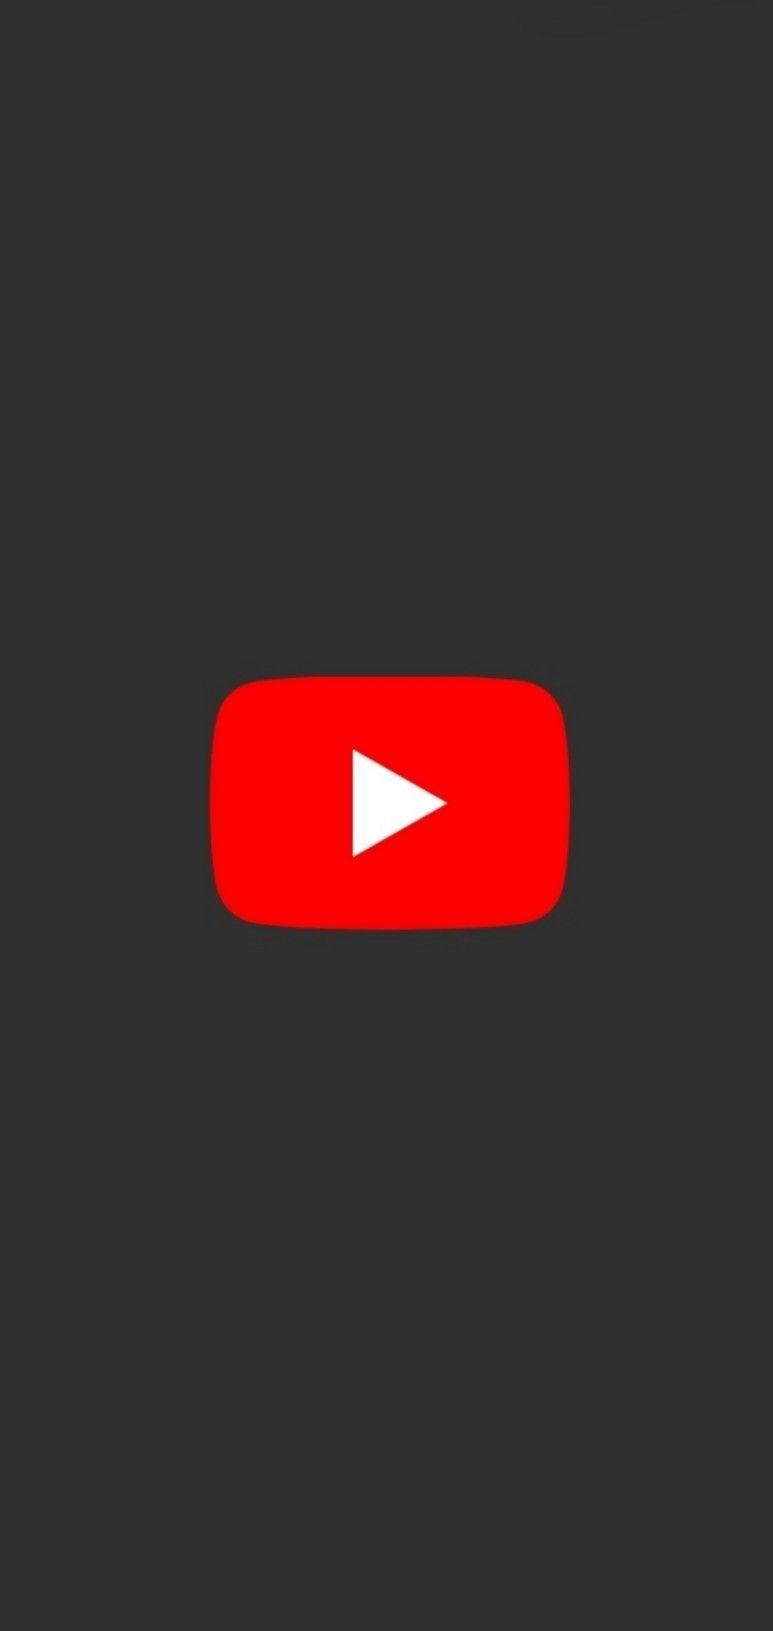 Youtube Youtube logo Cute cartoon wallpapers Dp logo